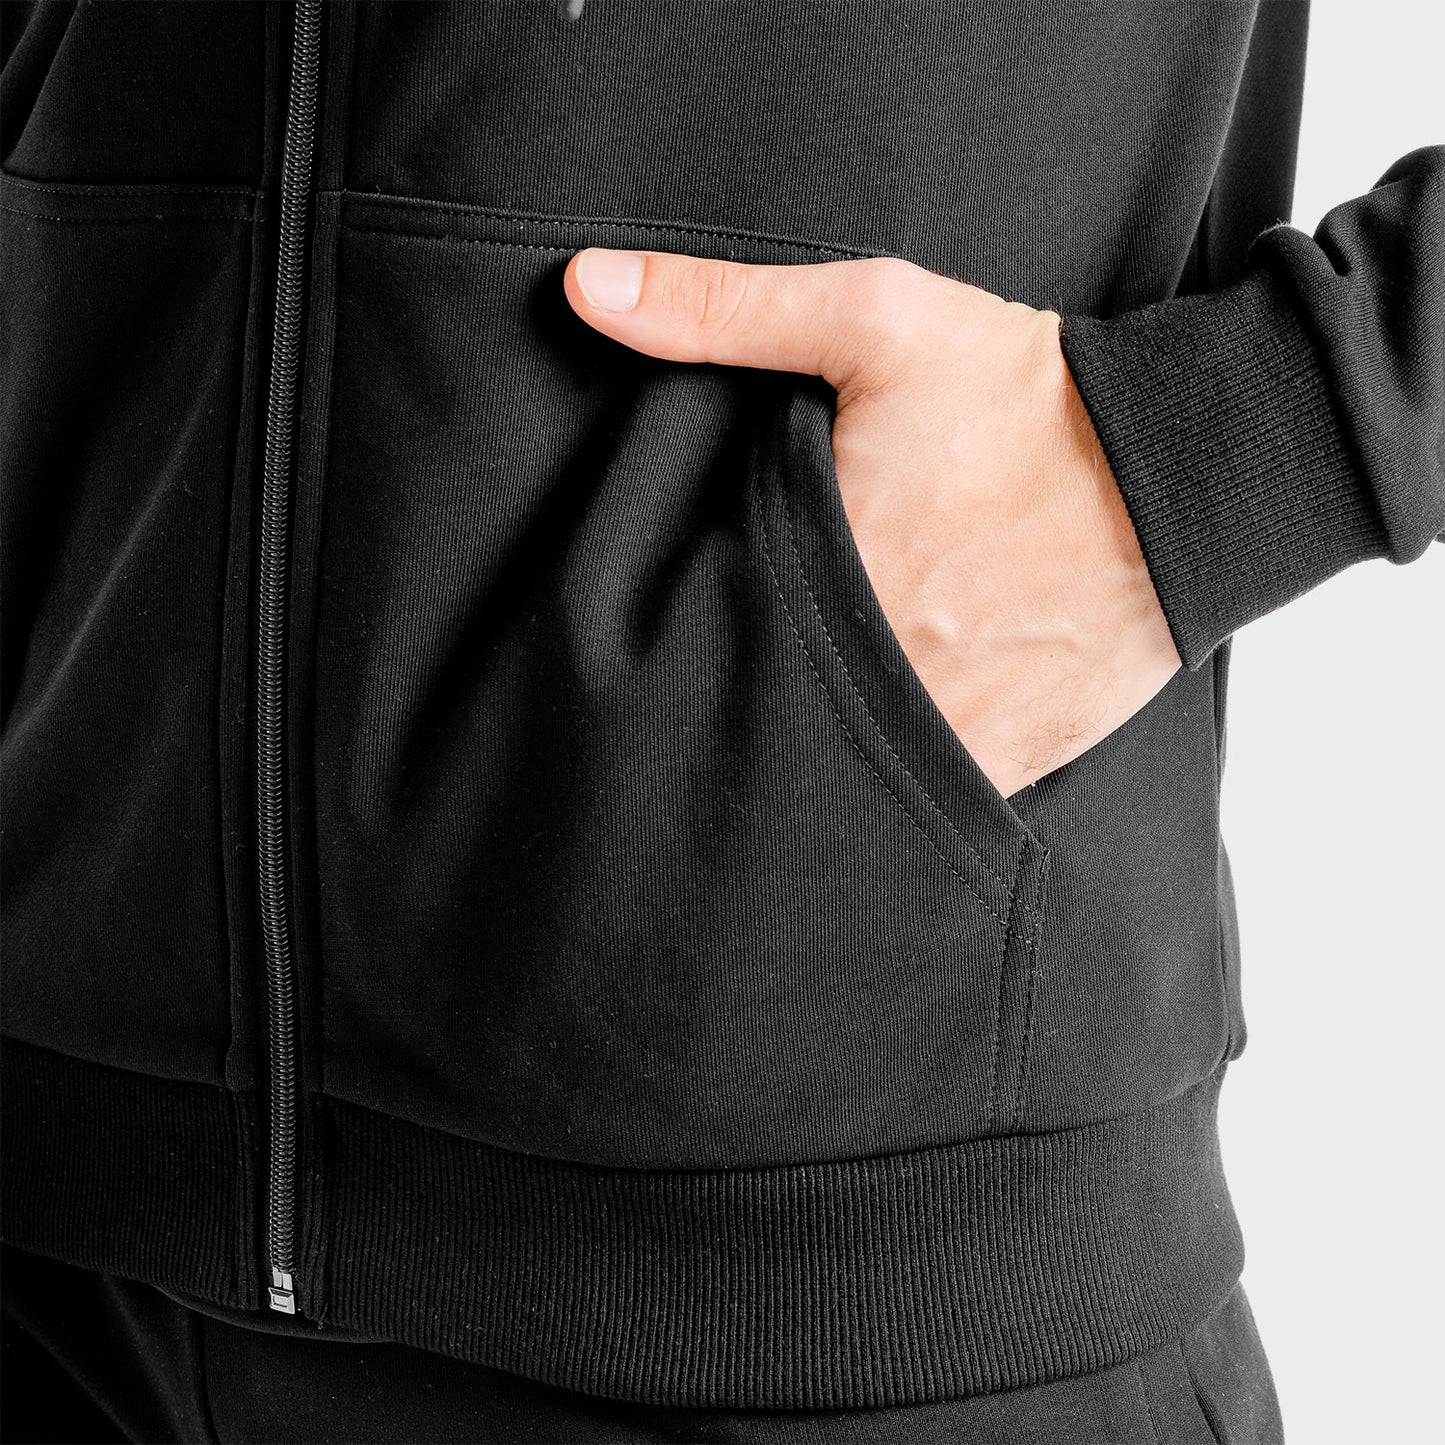 squatwolf-gym-wear-core-zip-up-black-workout-hoodies-for-men